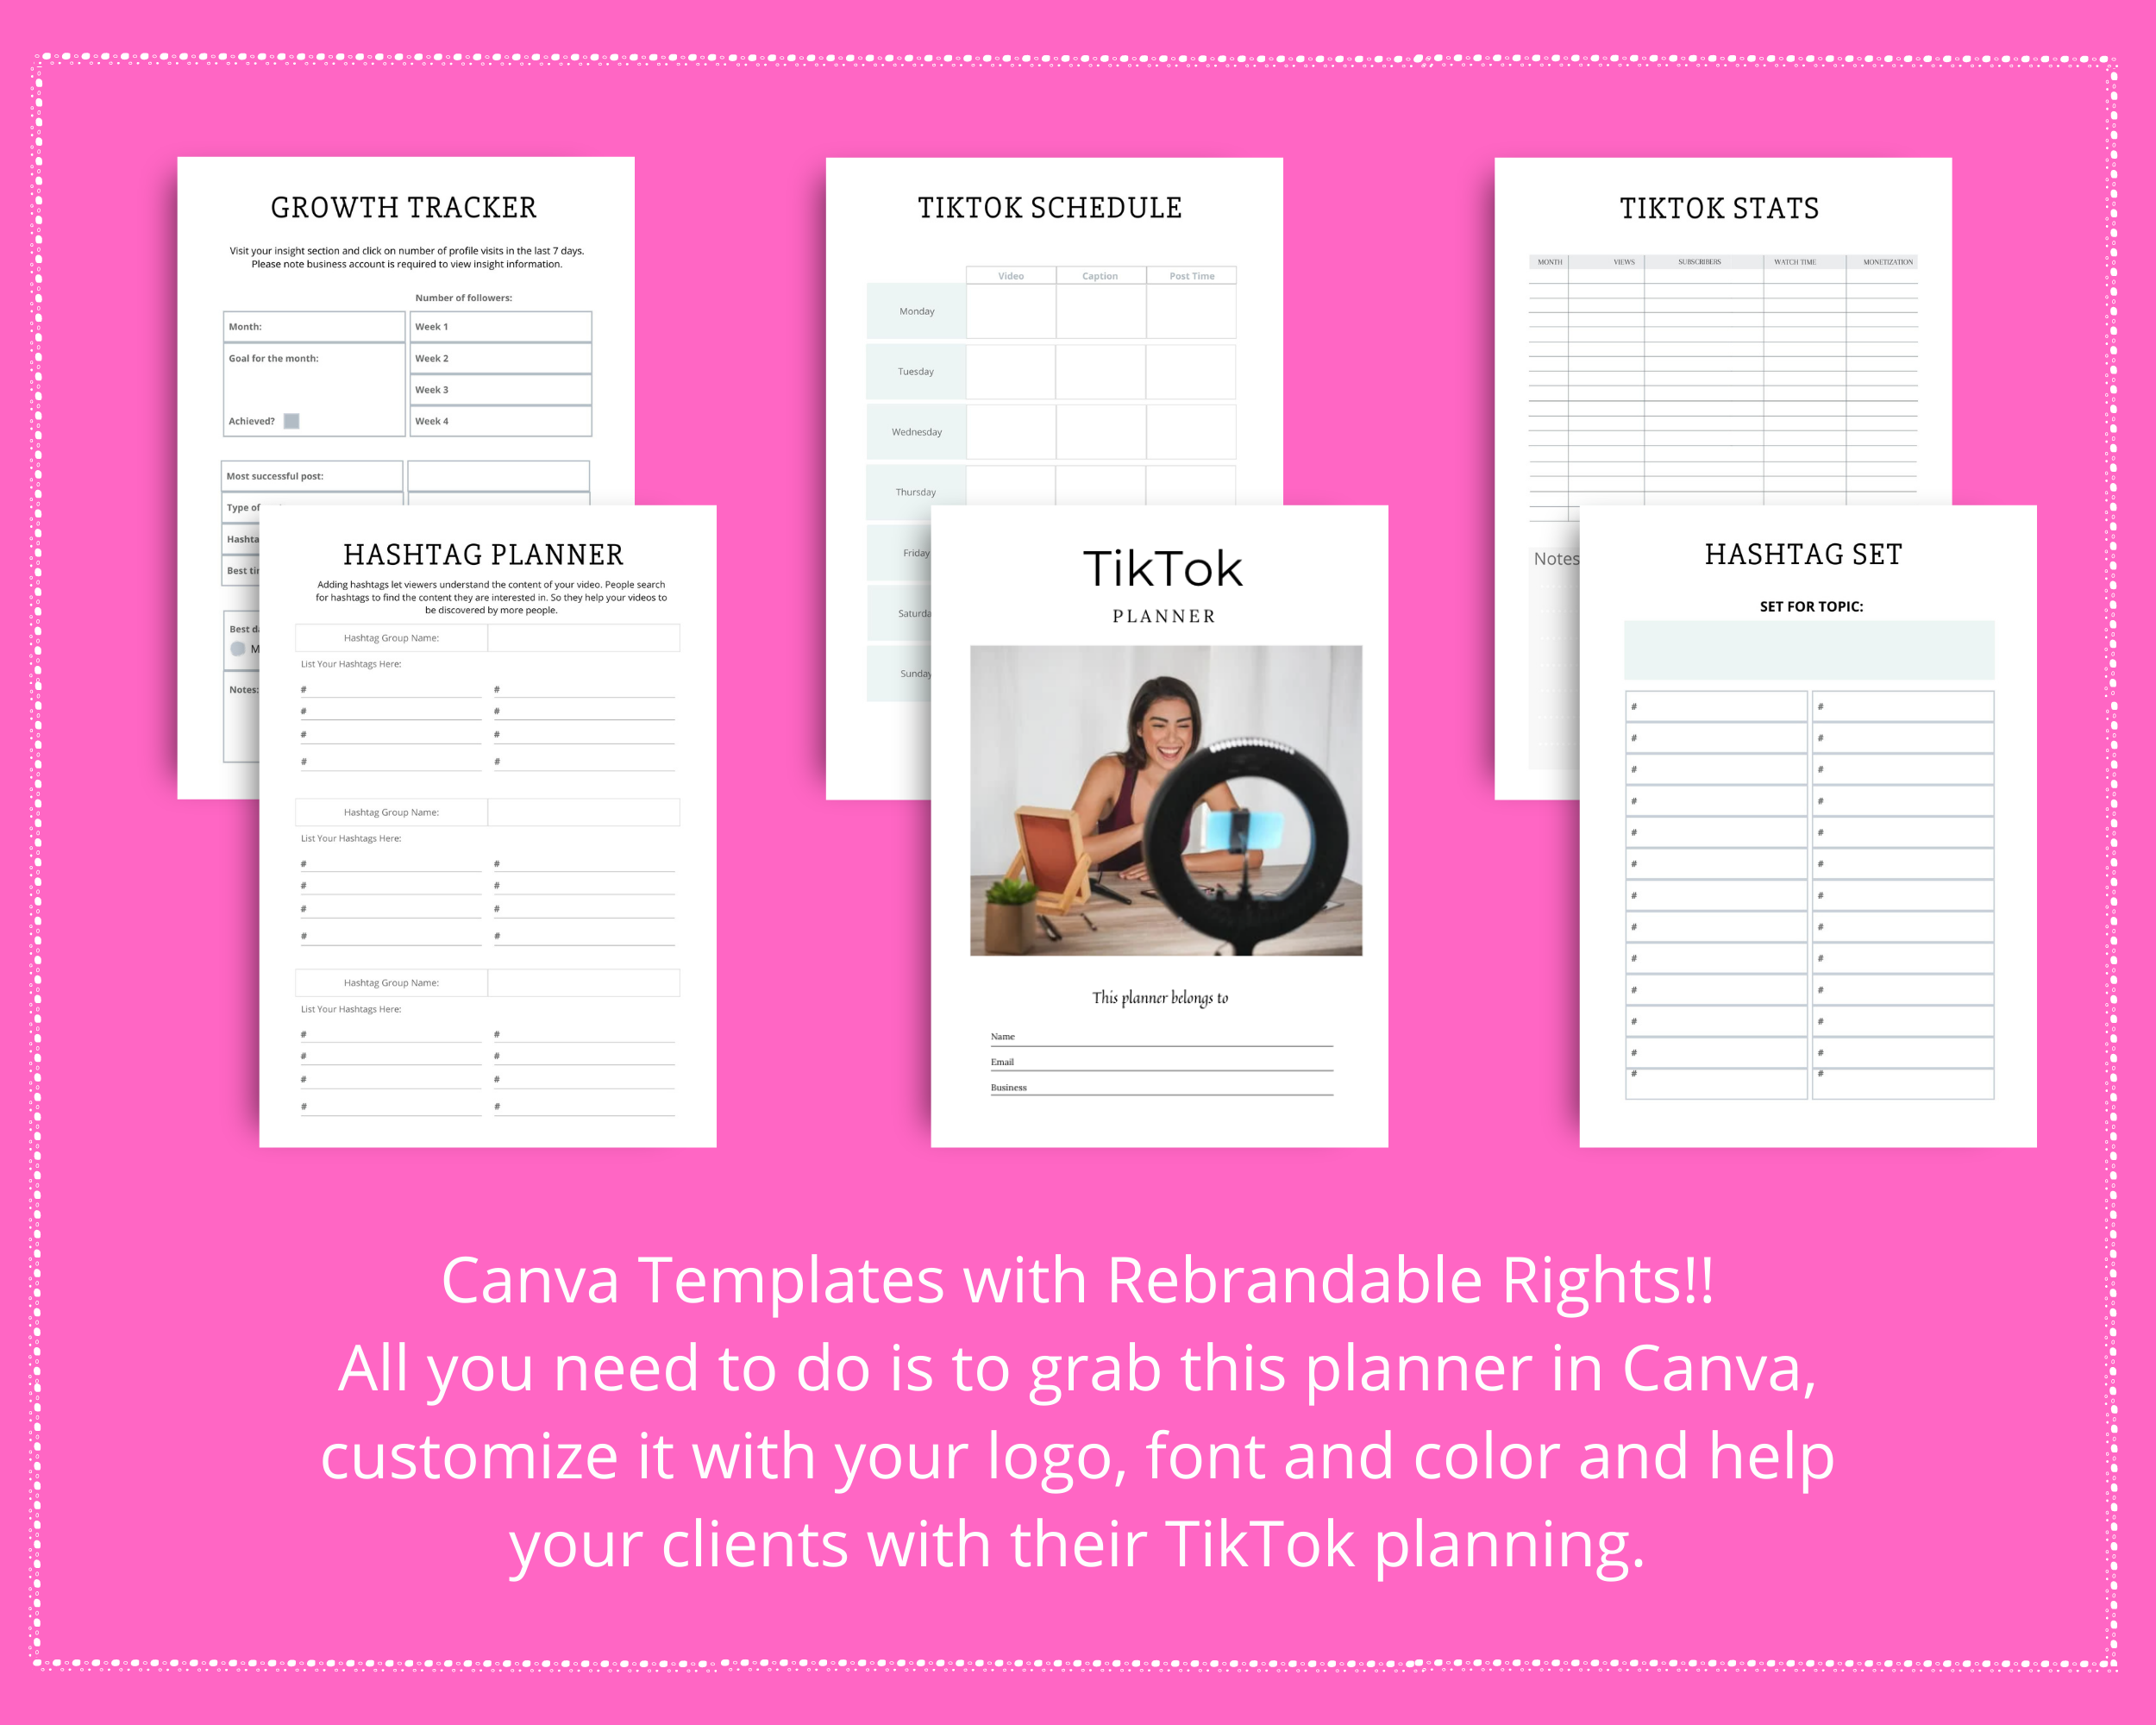 Editable TikTok Planner in Canva | Commercial Use